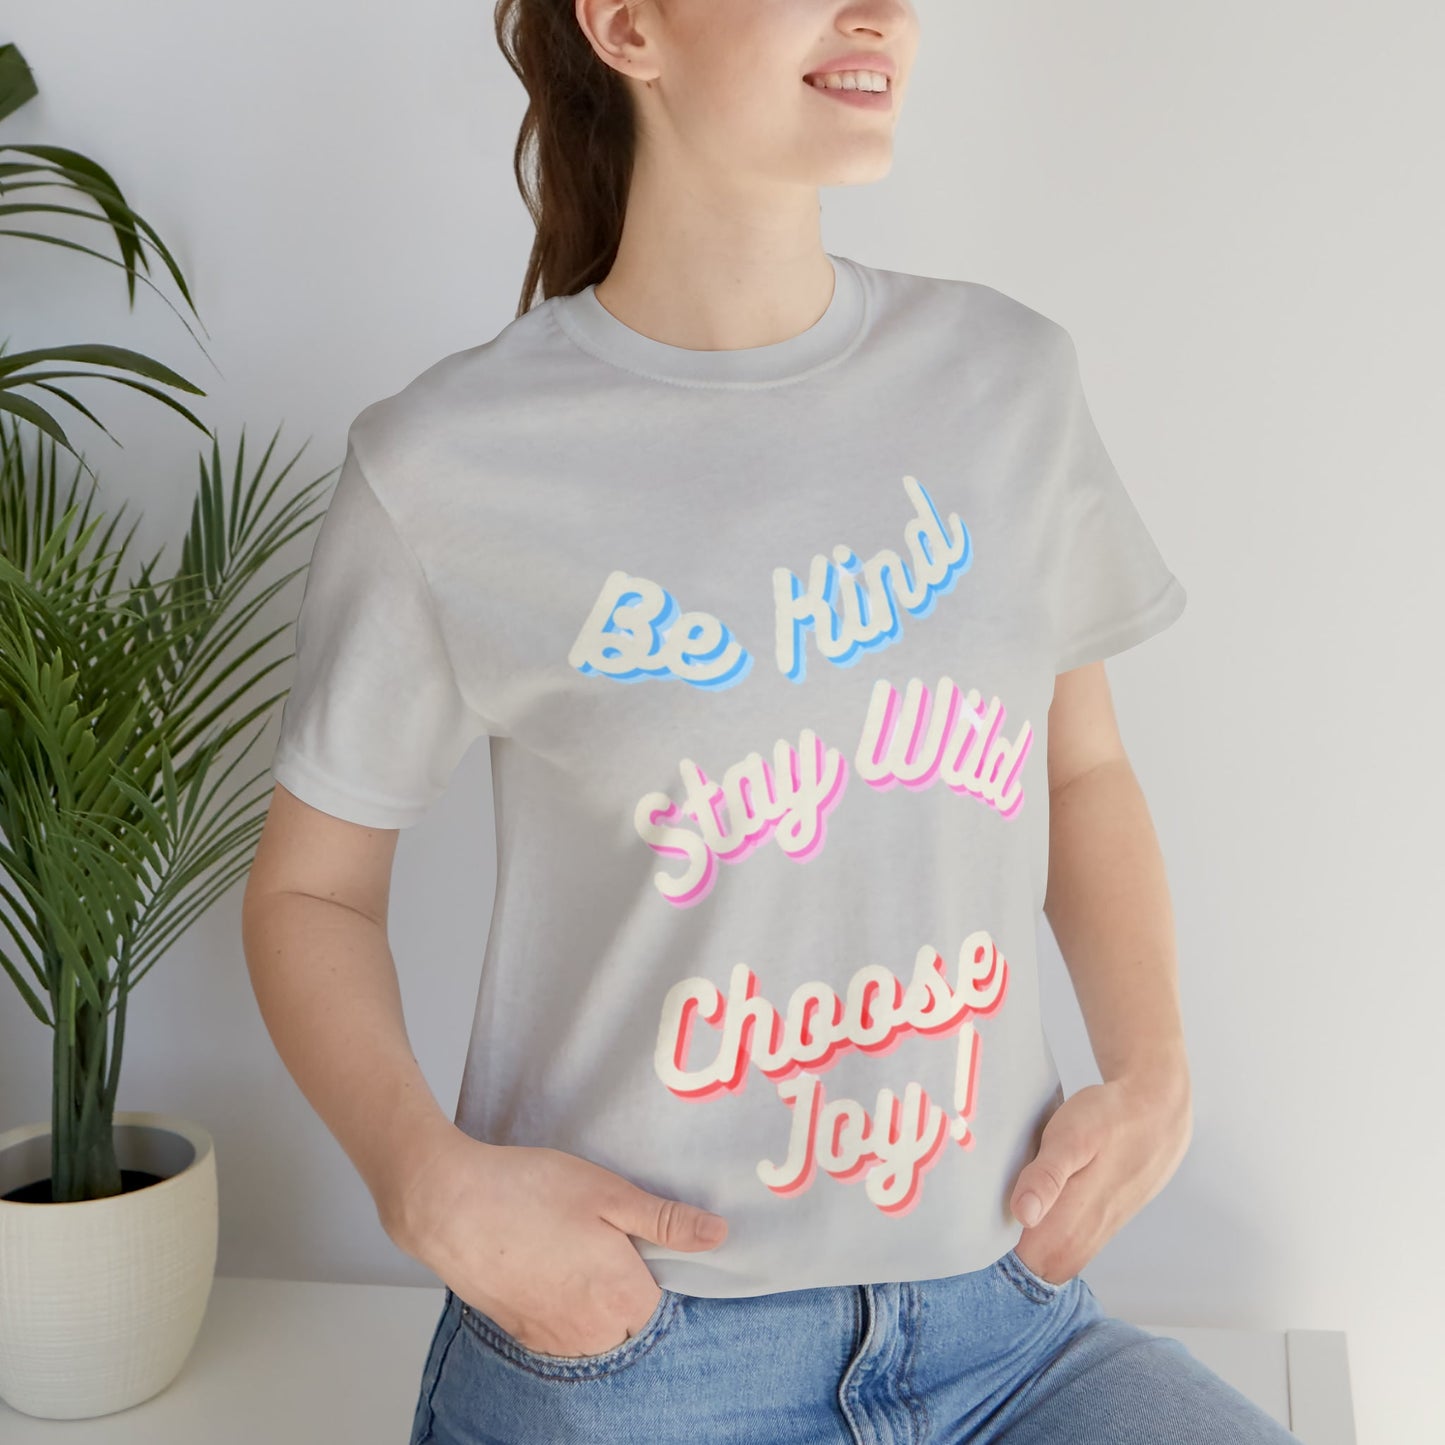 Be Kind, Stay Wild, Choose Joy. Unisex Jersey Short Sleeve Tee-Shalav5